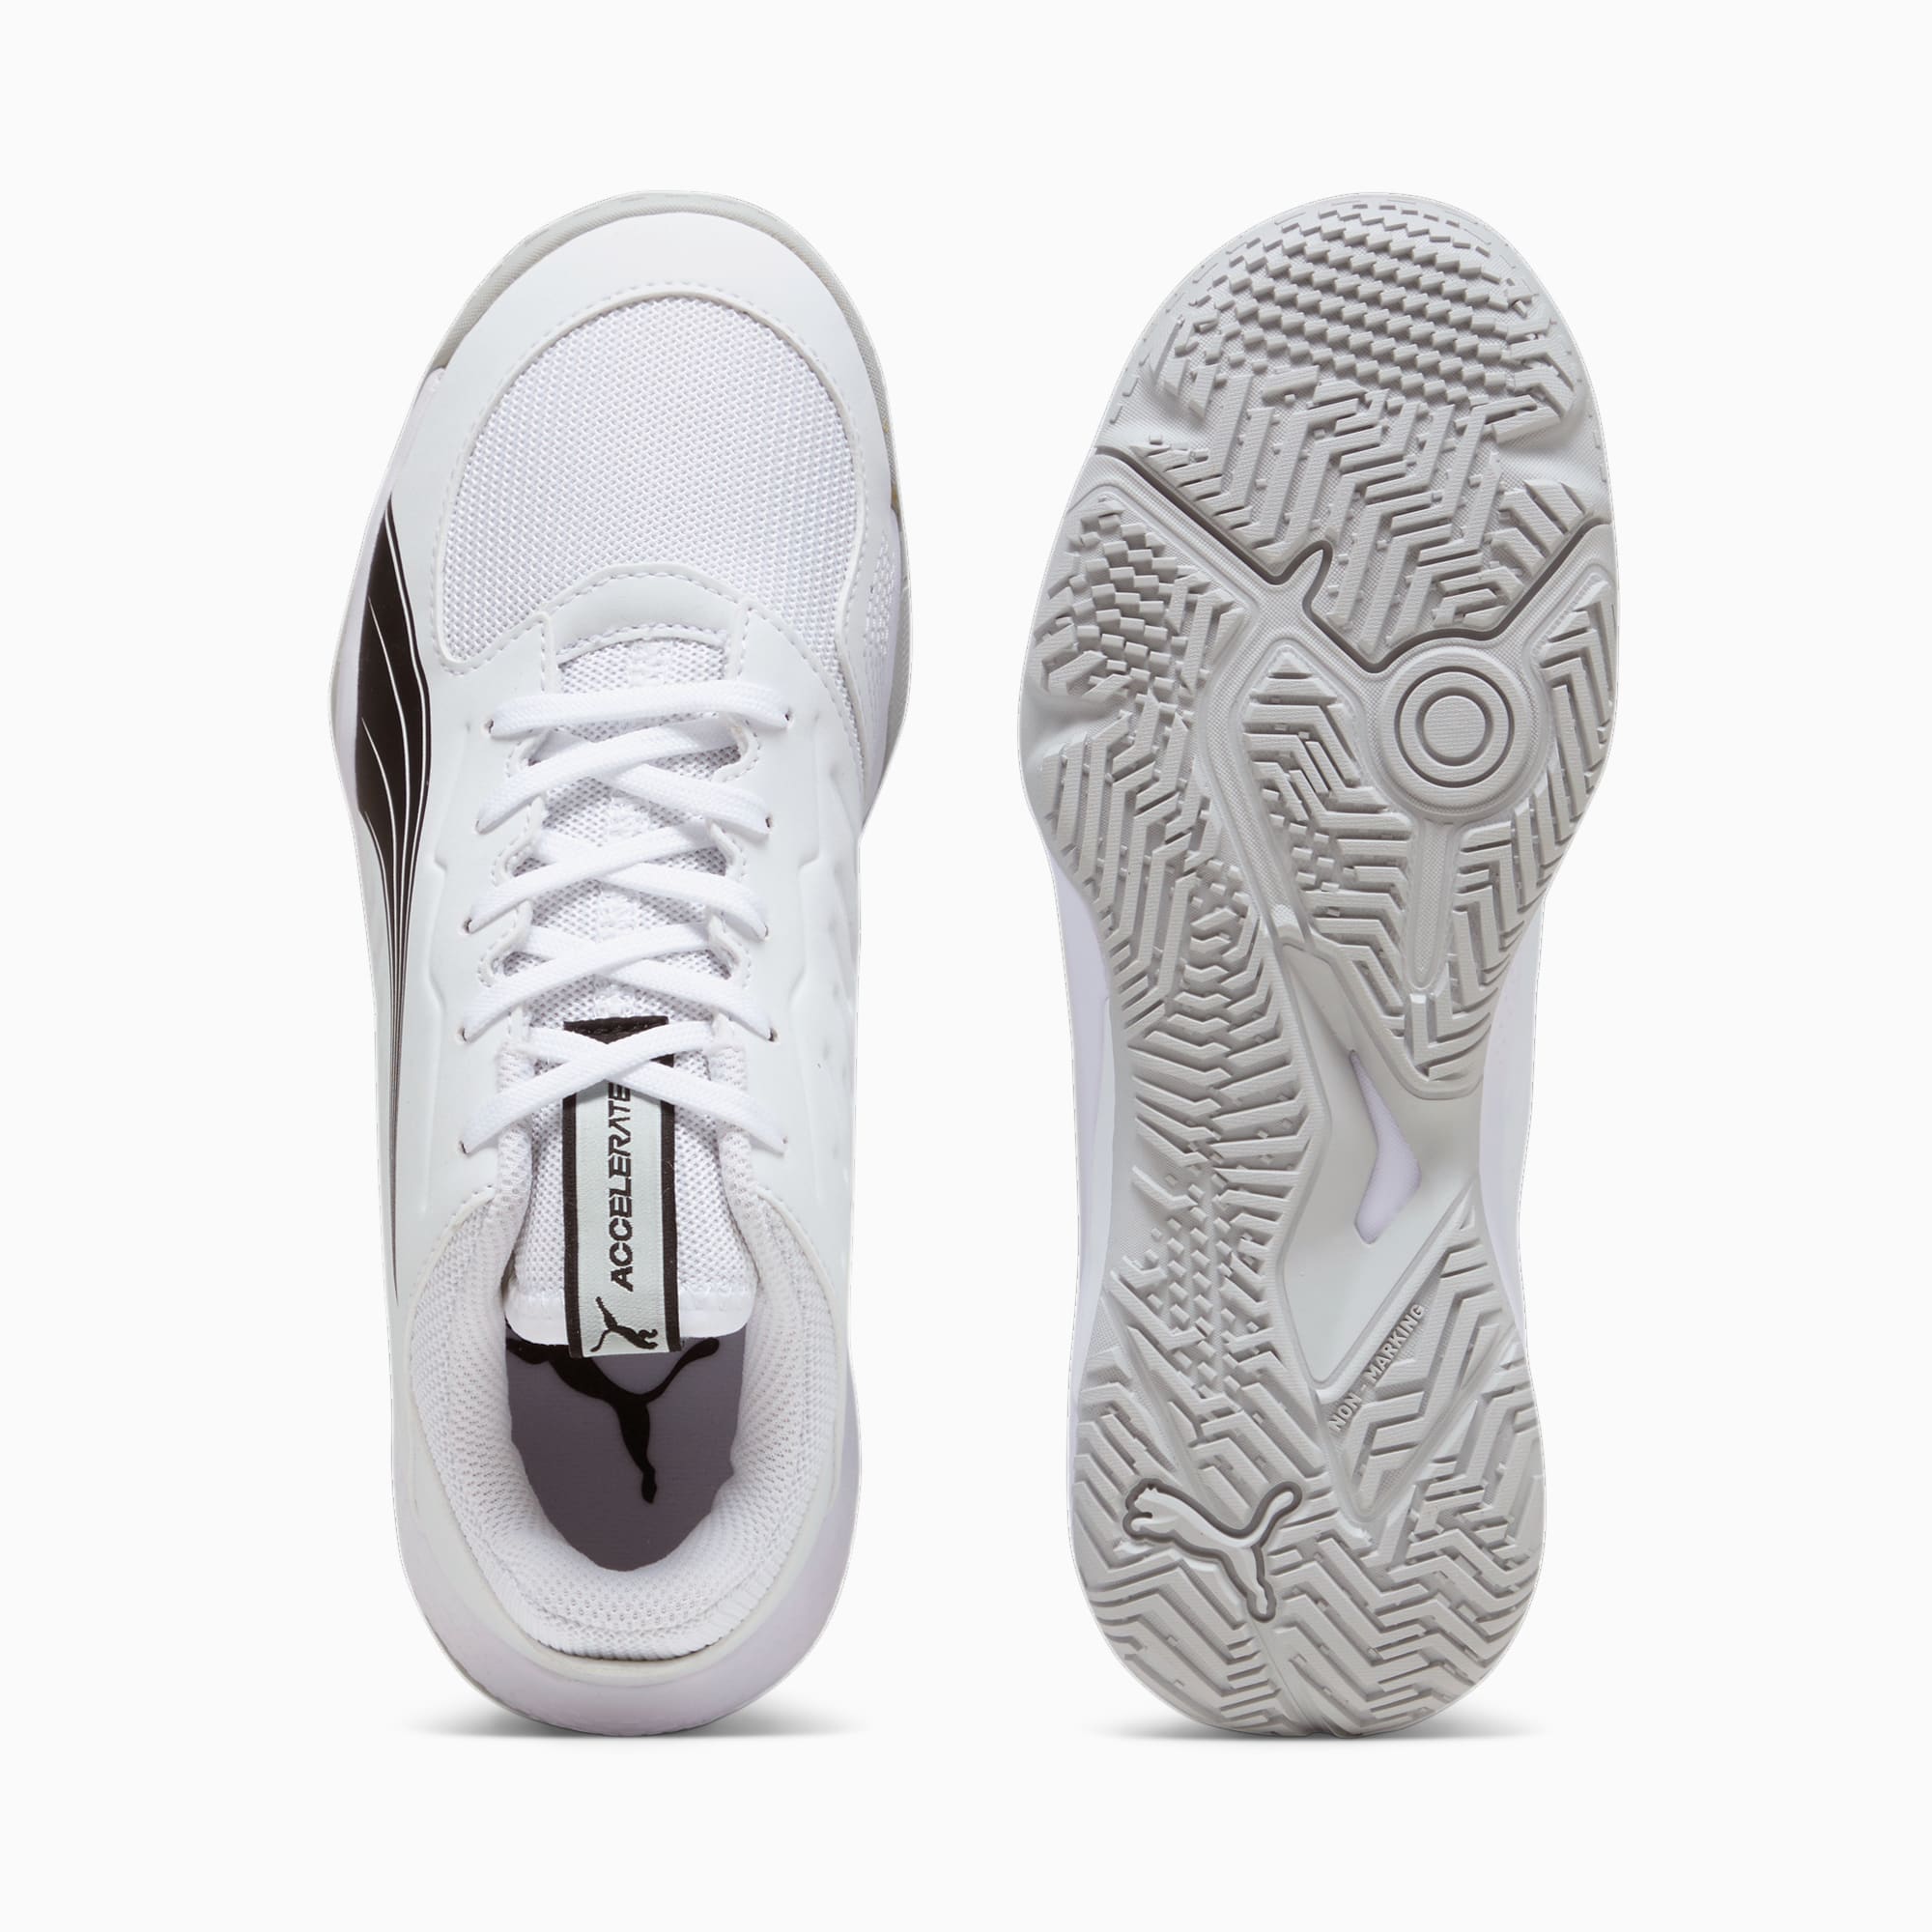 PUMA Accelerate Kids' Handball Shoes, White/Black/Concrete Grey, Size 33, Shoes